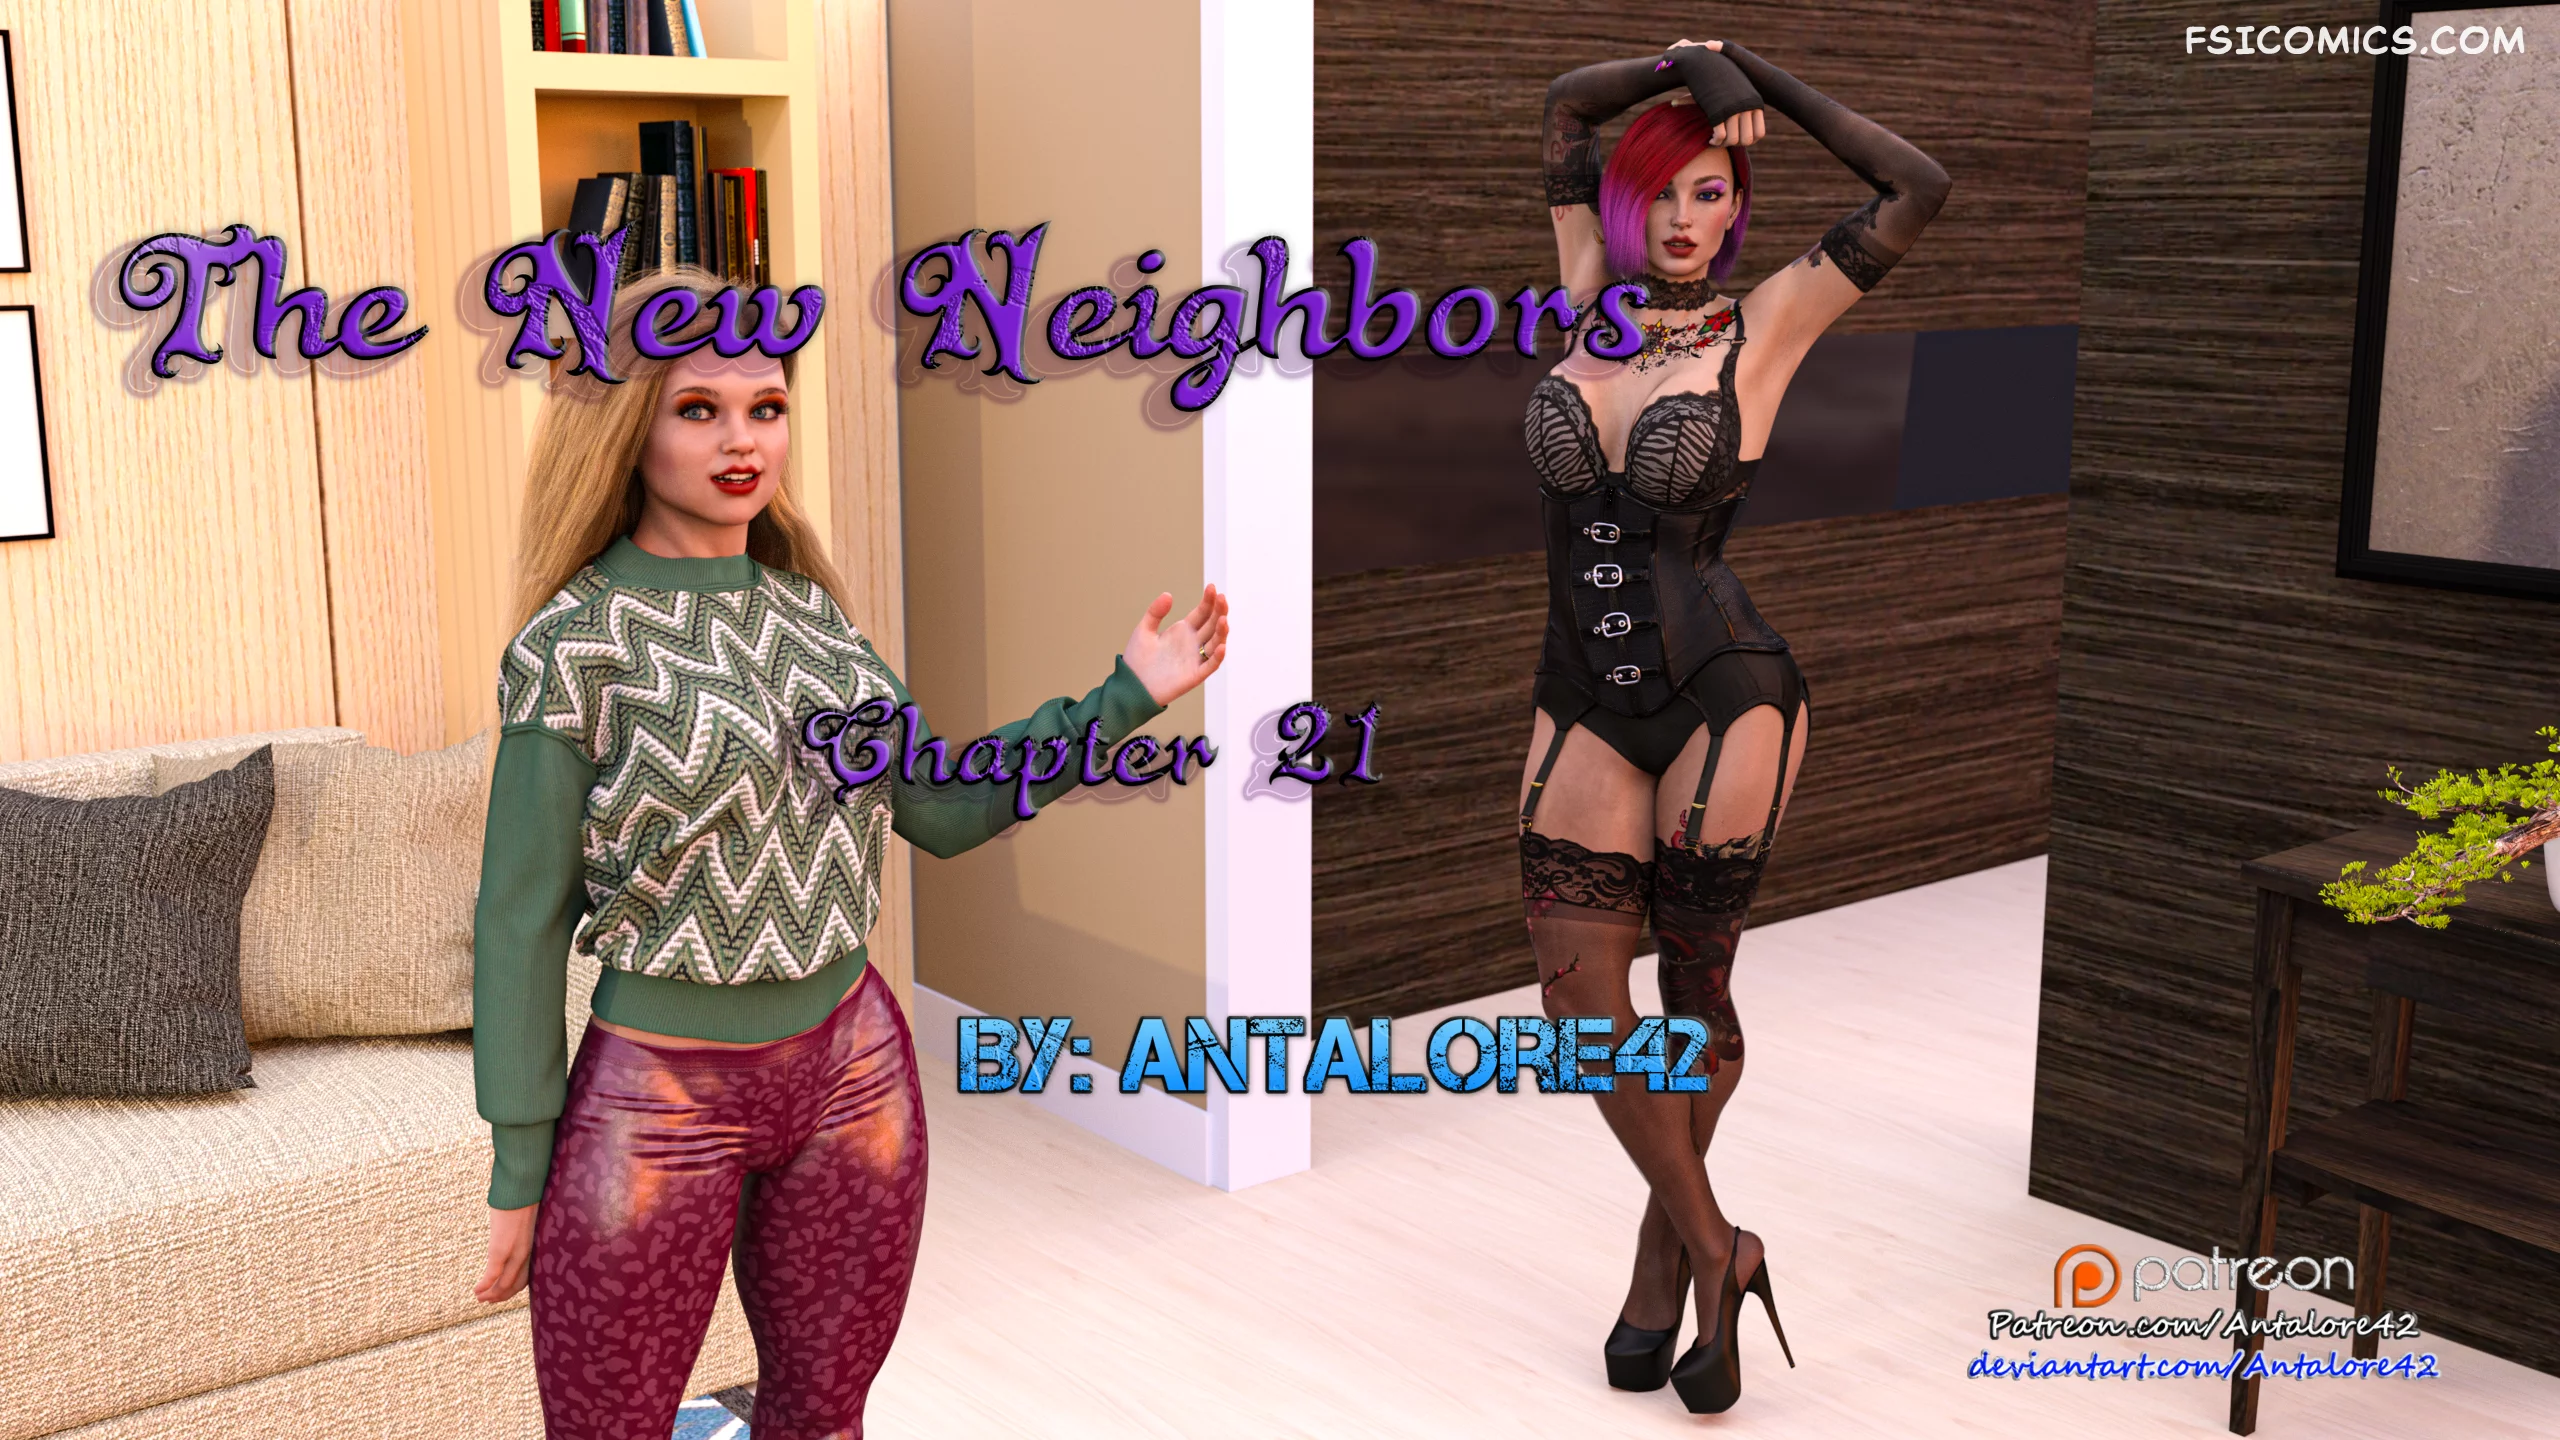 The New Neighbors Chapter 21 – Antalore42 - 43 - FSIComics